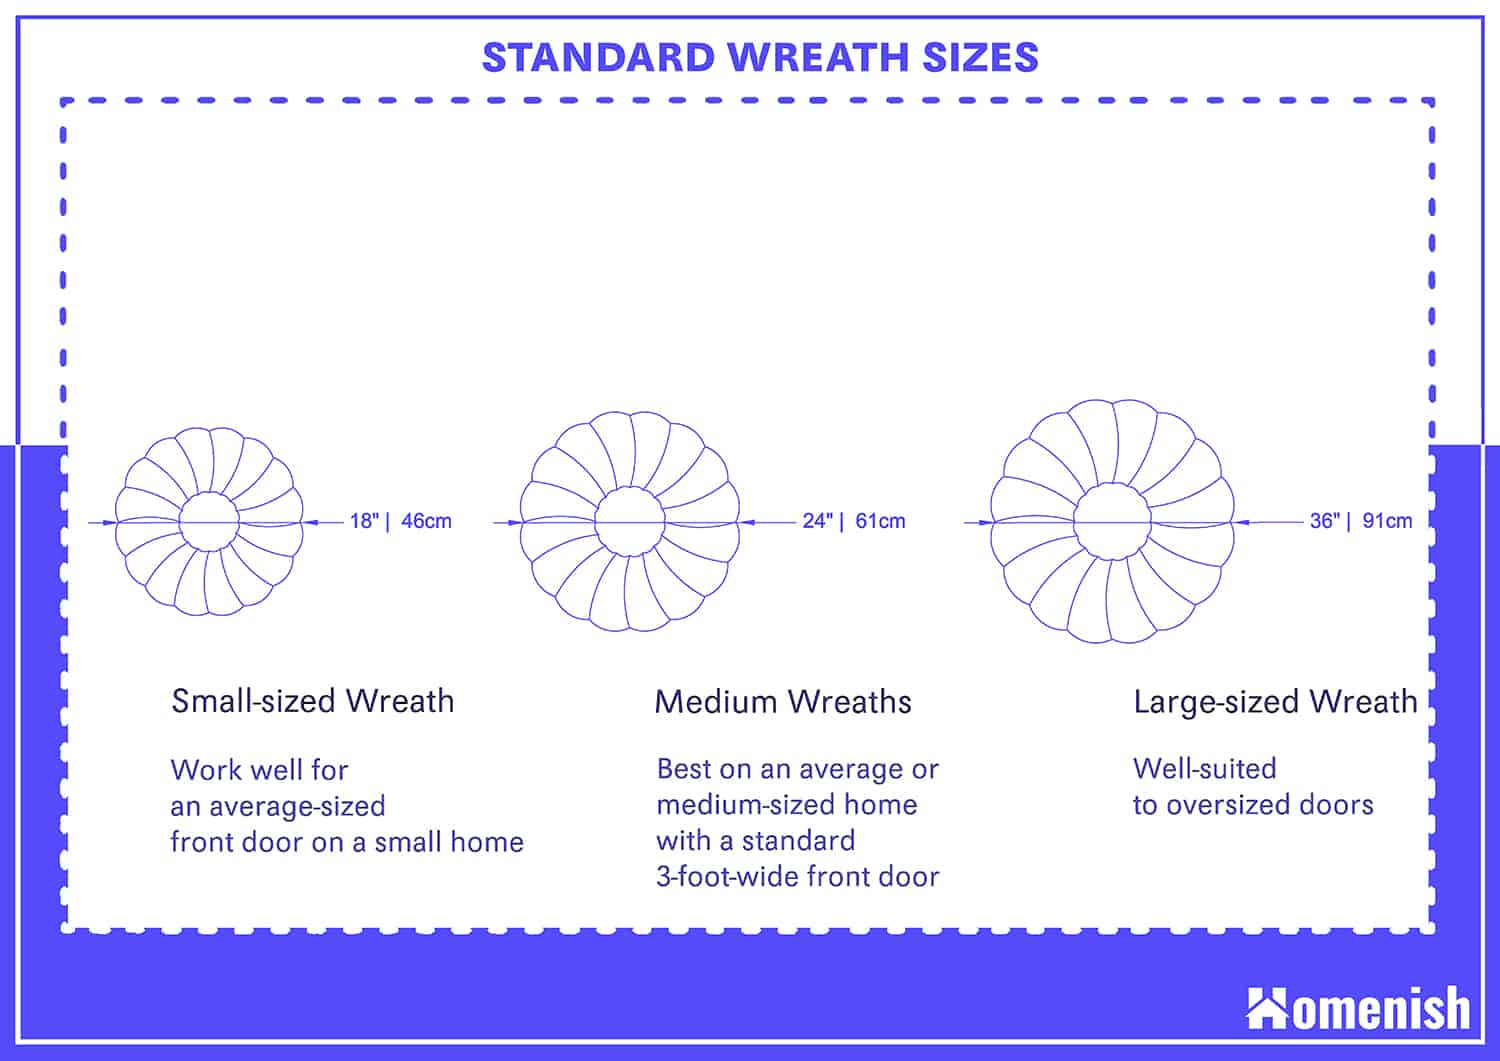 Standard Wreath Sizes